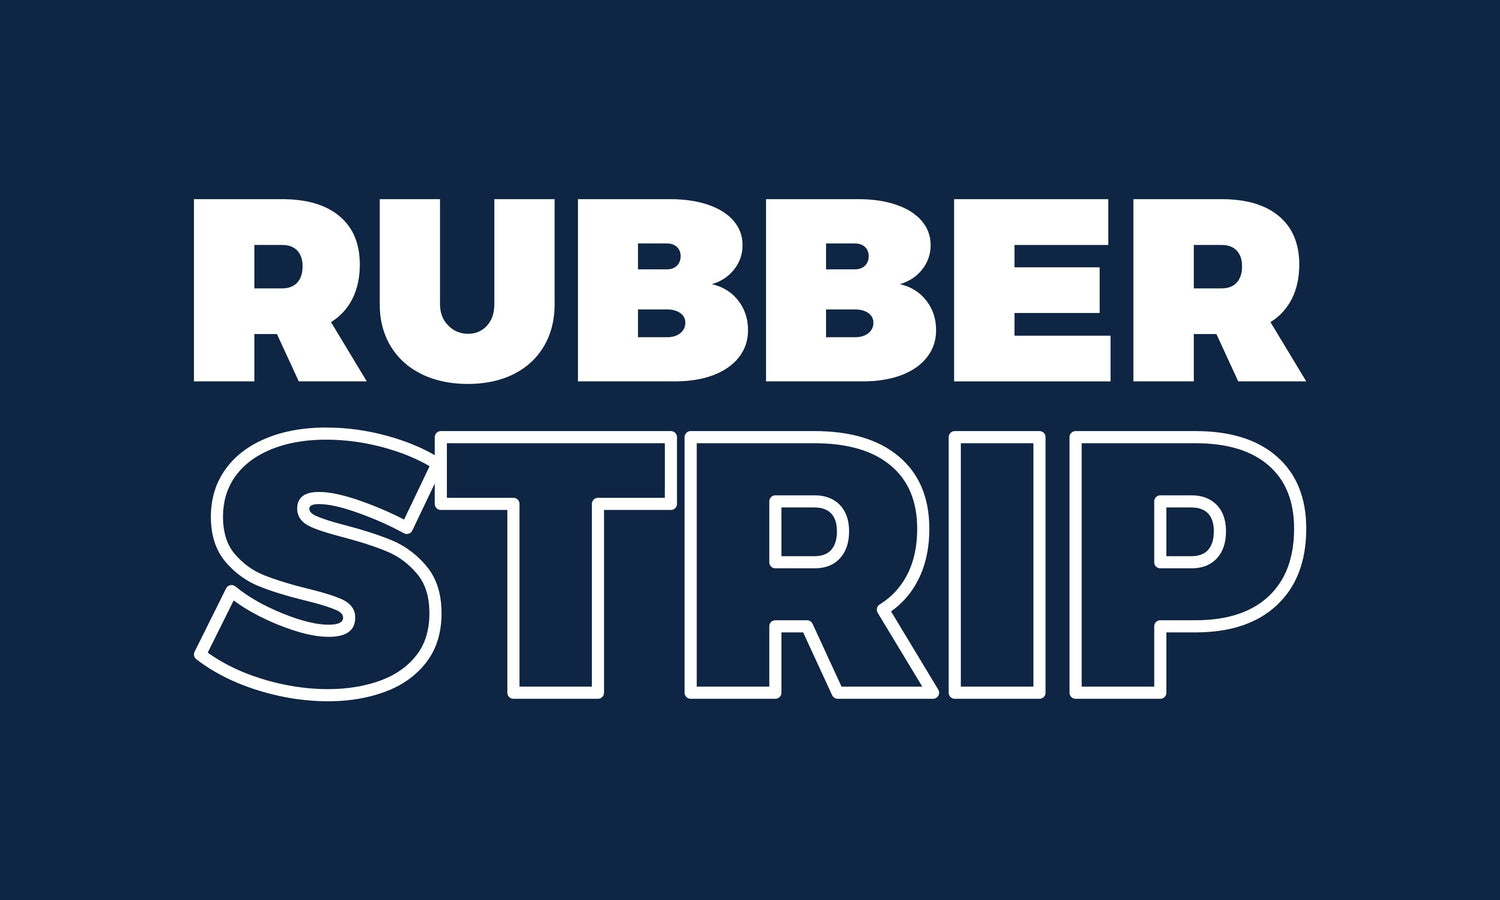 Rubber Strip